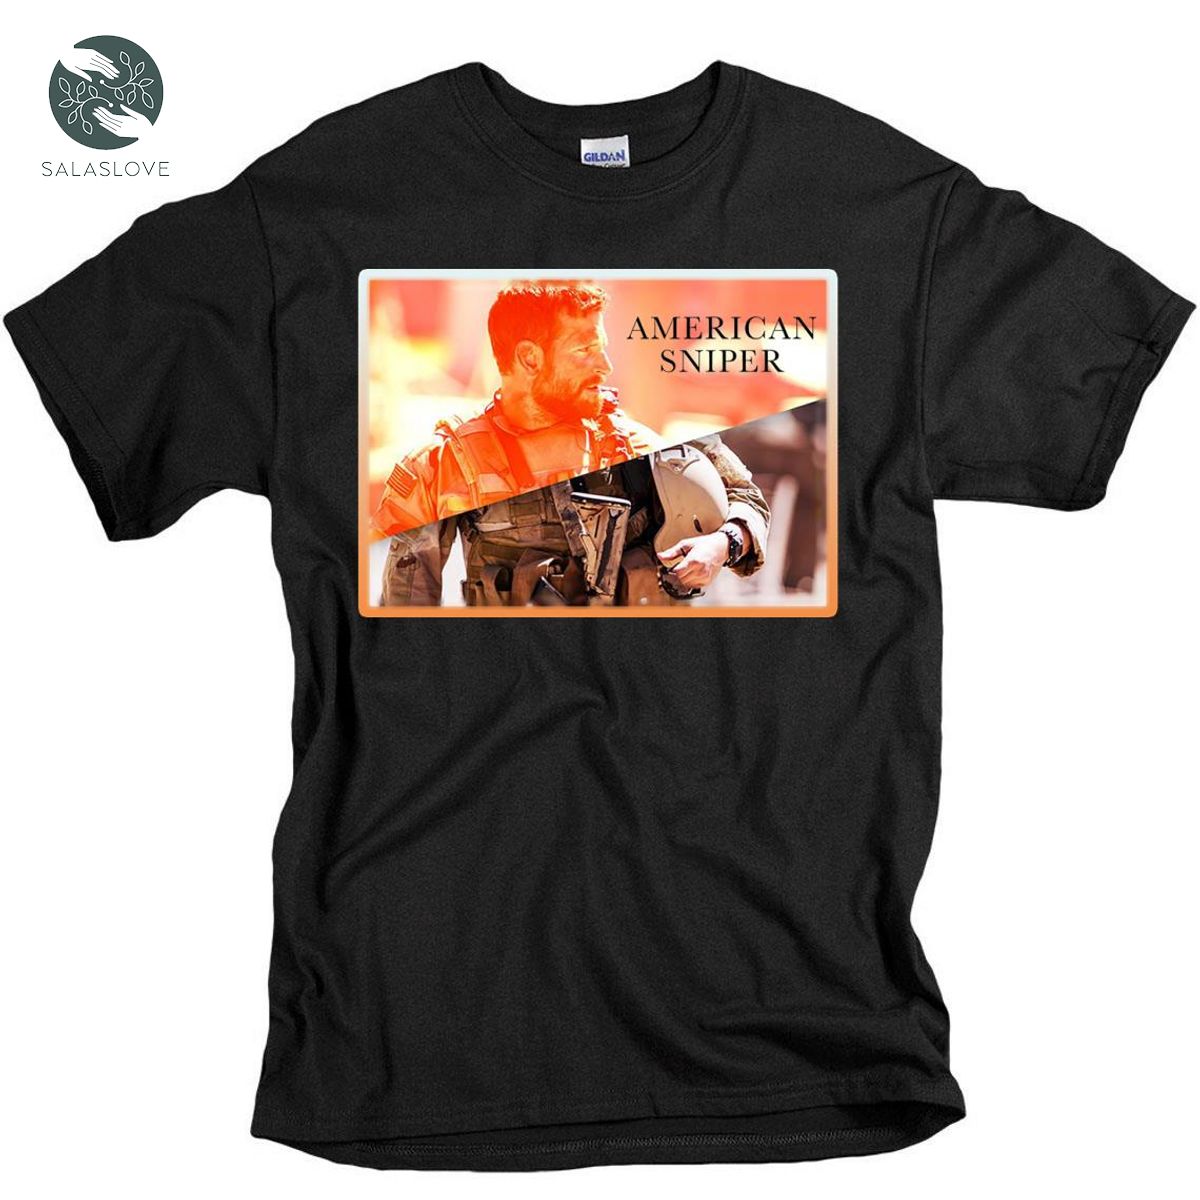 Bradley Cooper - American Sniper War Movie T-shirt